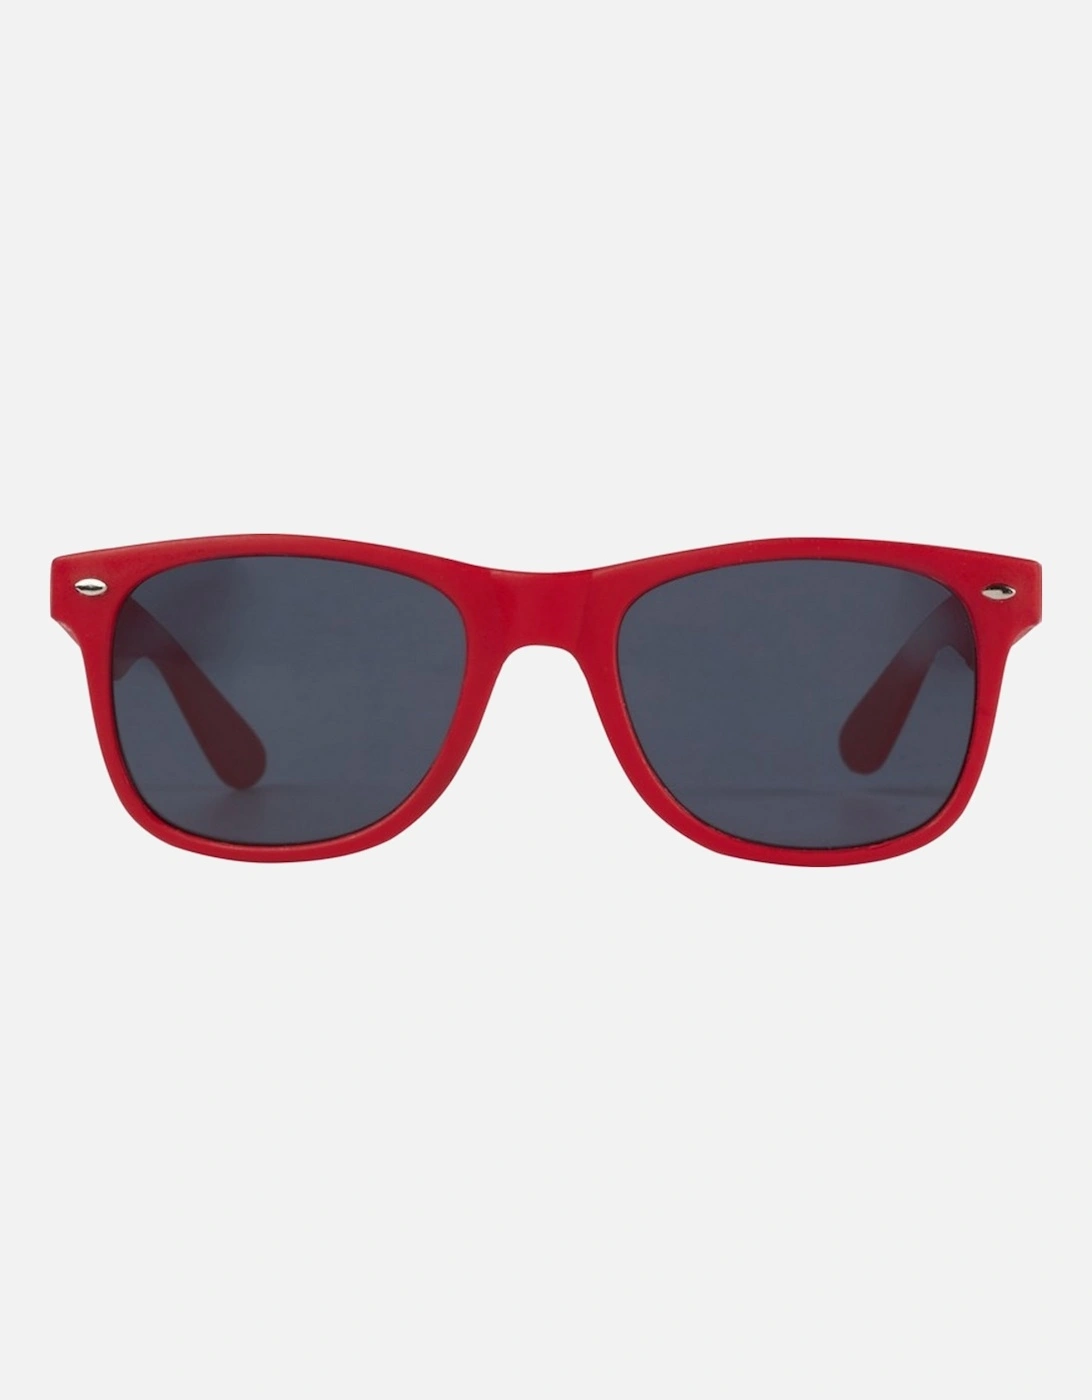 Unisex Adult Sun Ray Sunglasses